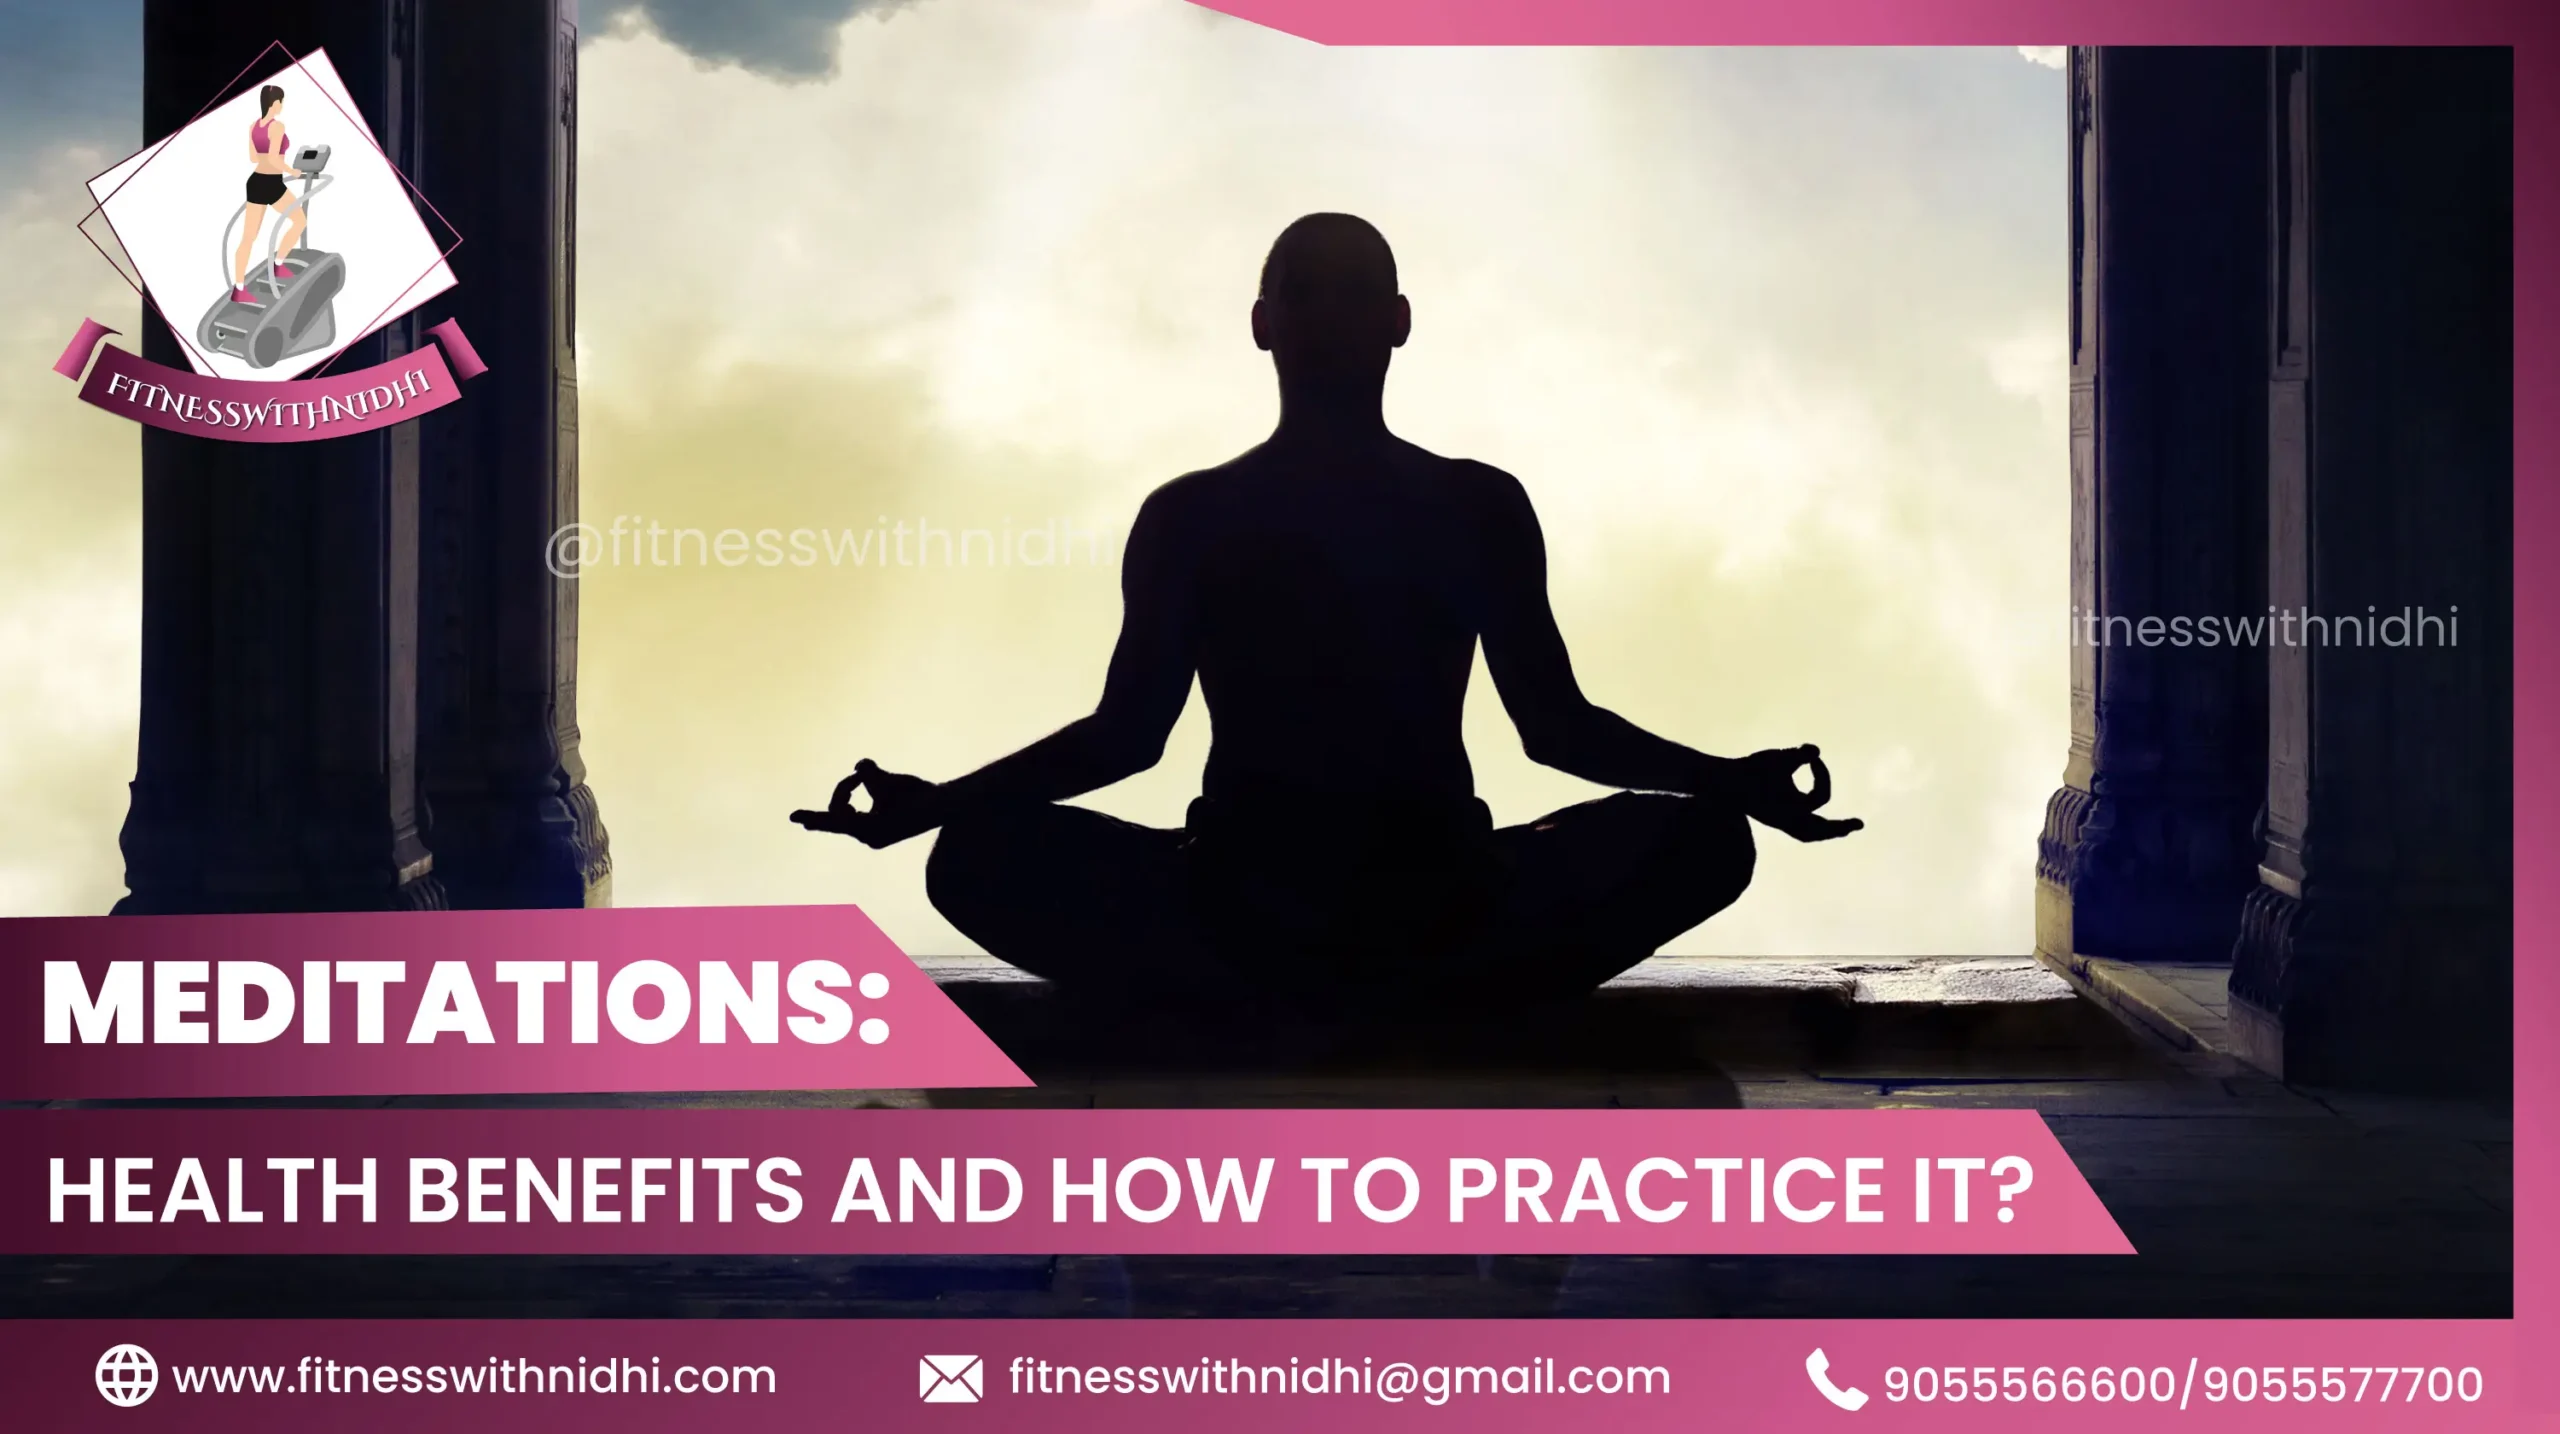 11how to practice meditations health benefits